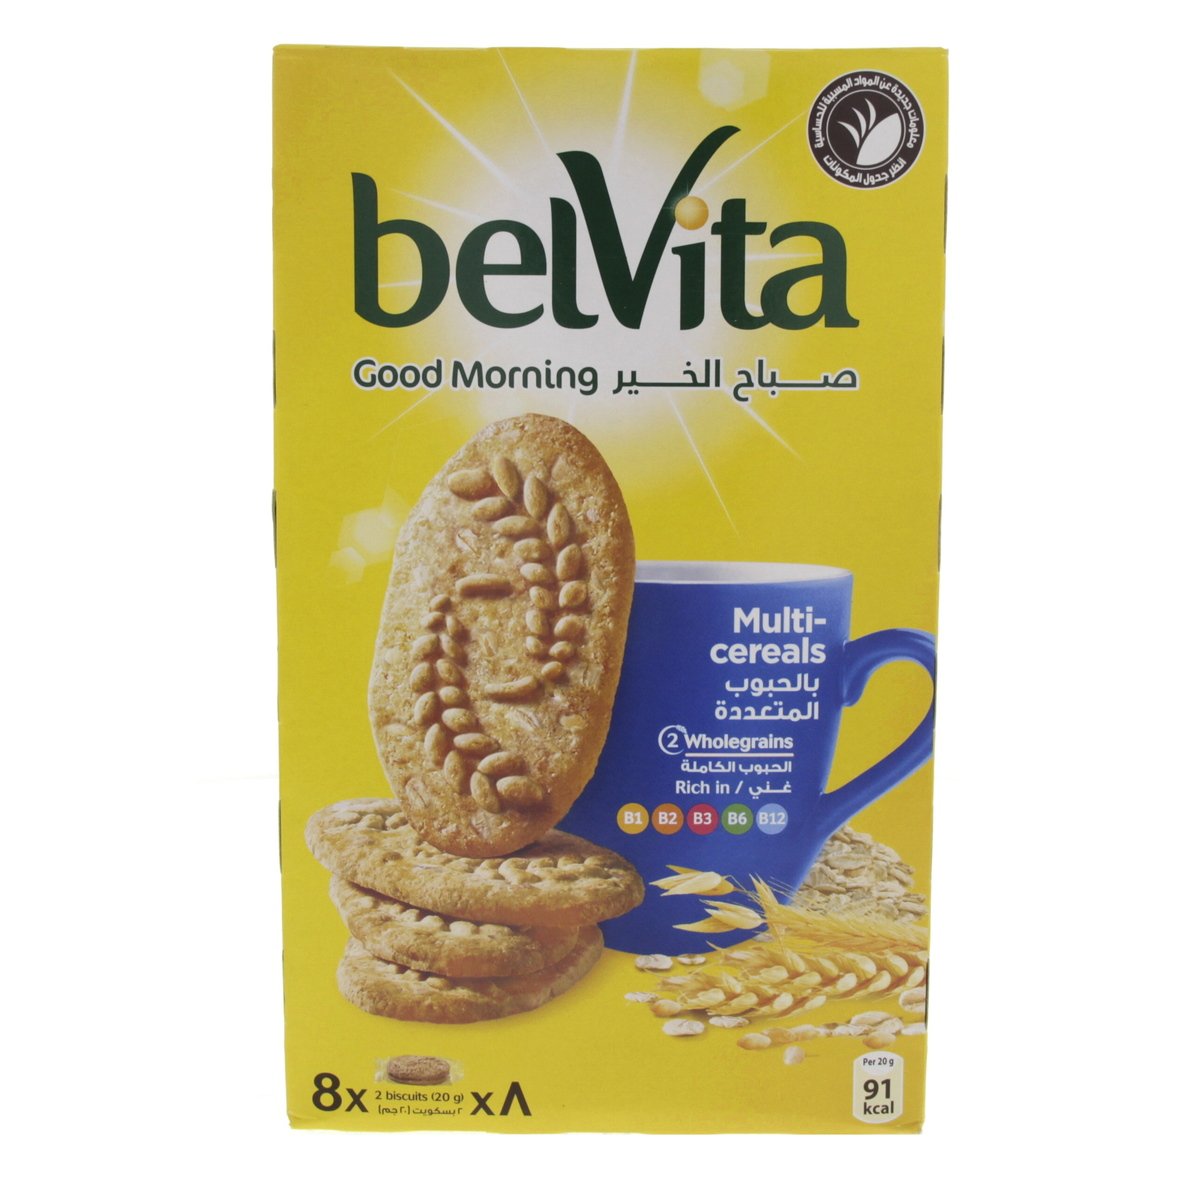 Belvita Good Morning Multi Cereals Biscuits 160g